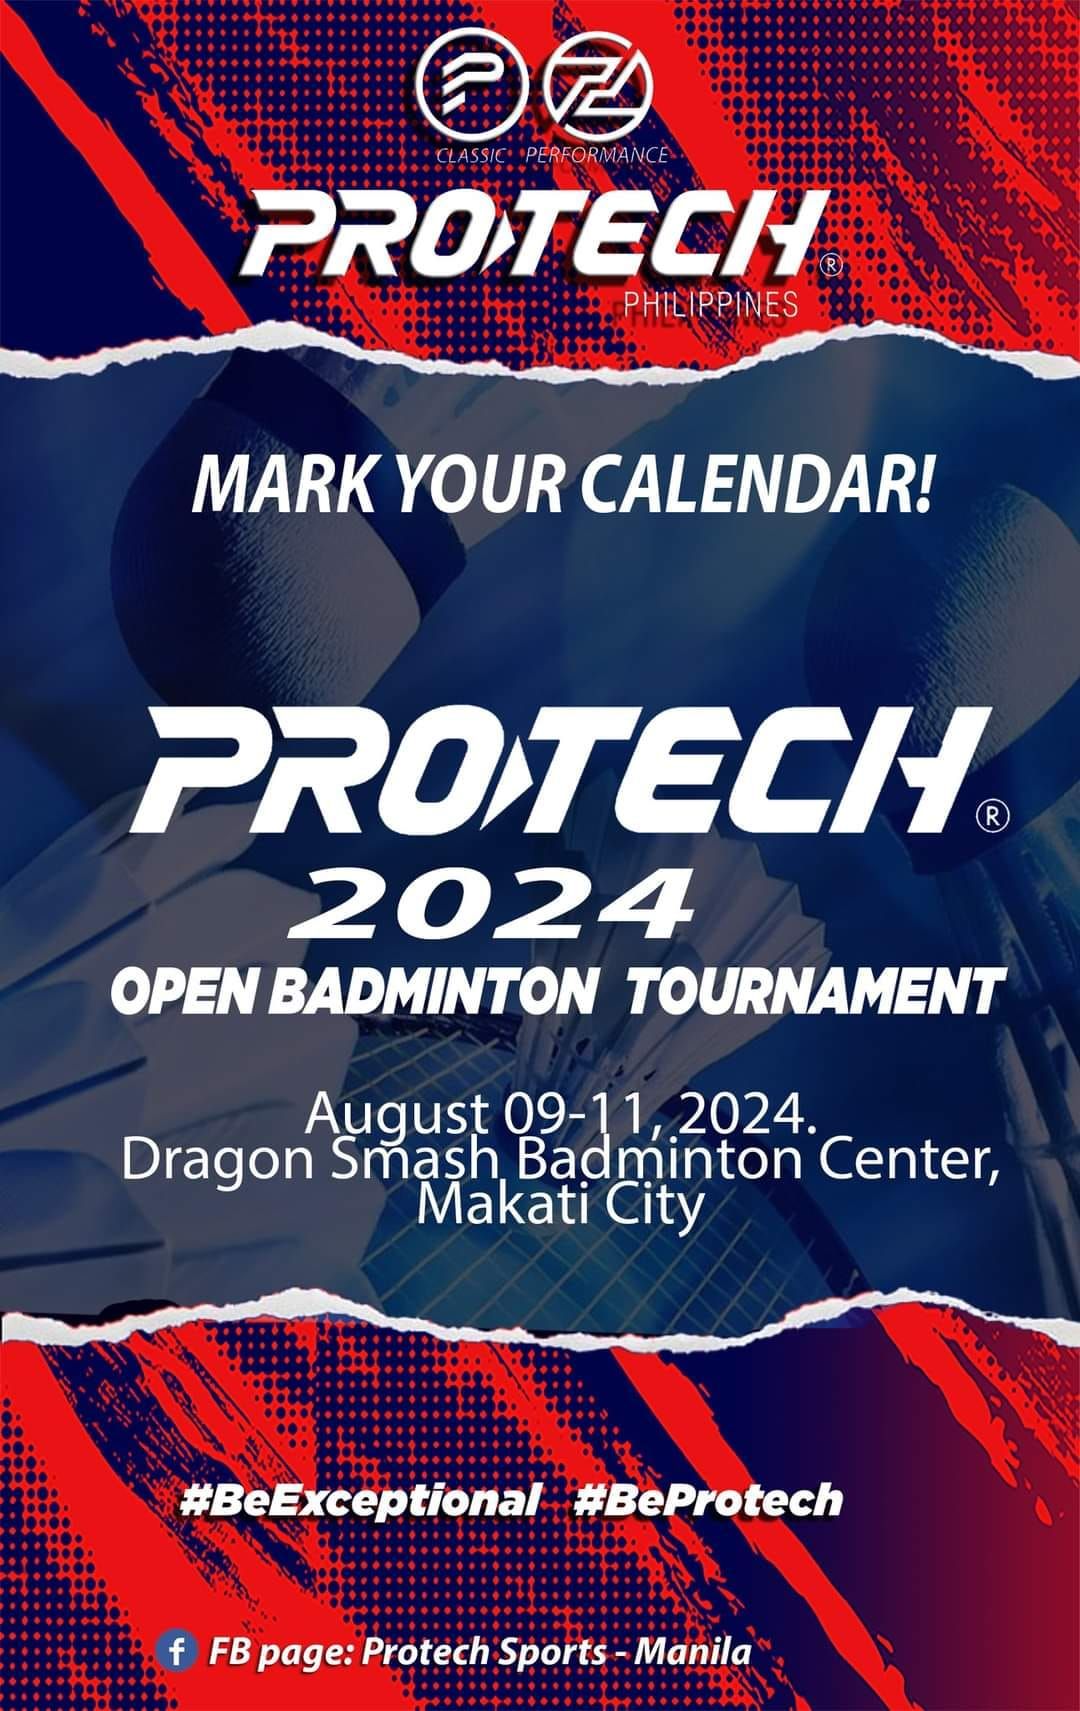 ProTech 2024 Open Badminton Tournament